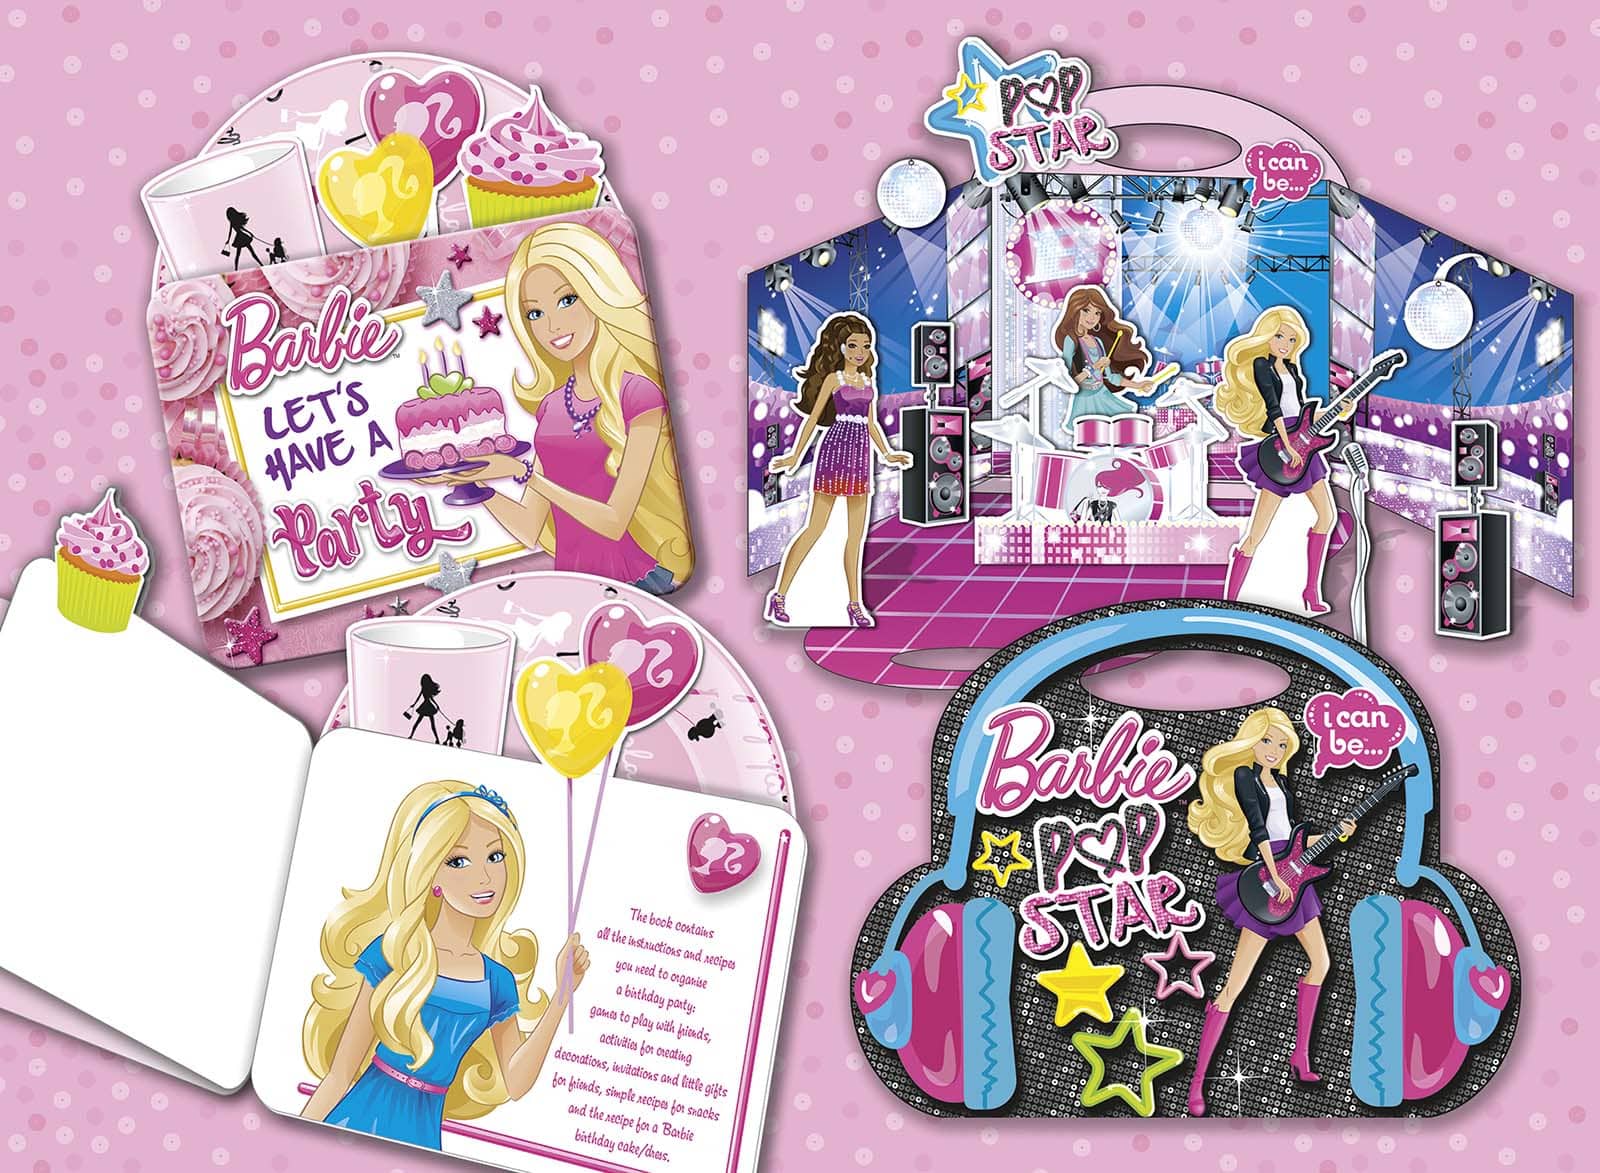 https://www.studiochiesakids.it/wp-content/uploads/2021/04/SC-studio-chiesa-Mattel-Barbie-Novelty-book_02.jpg